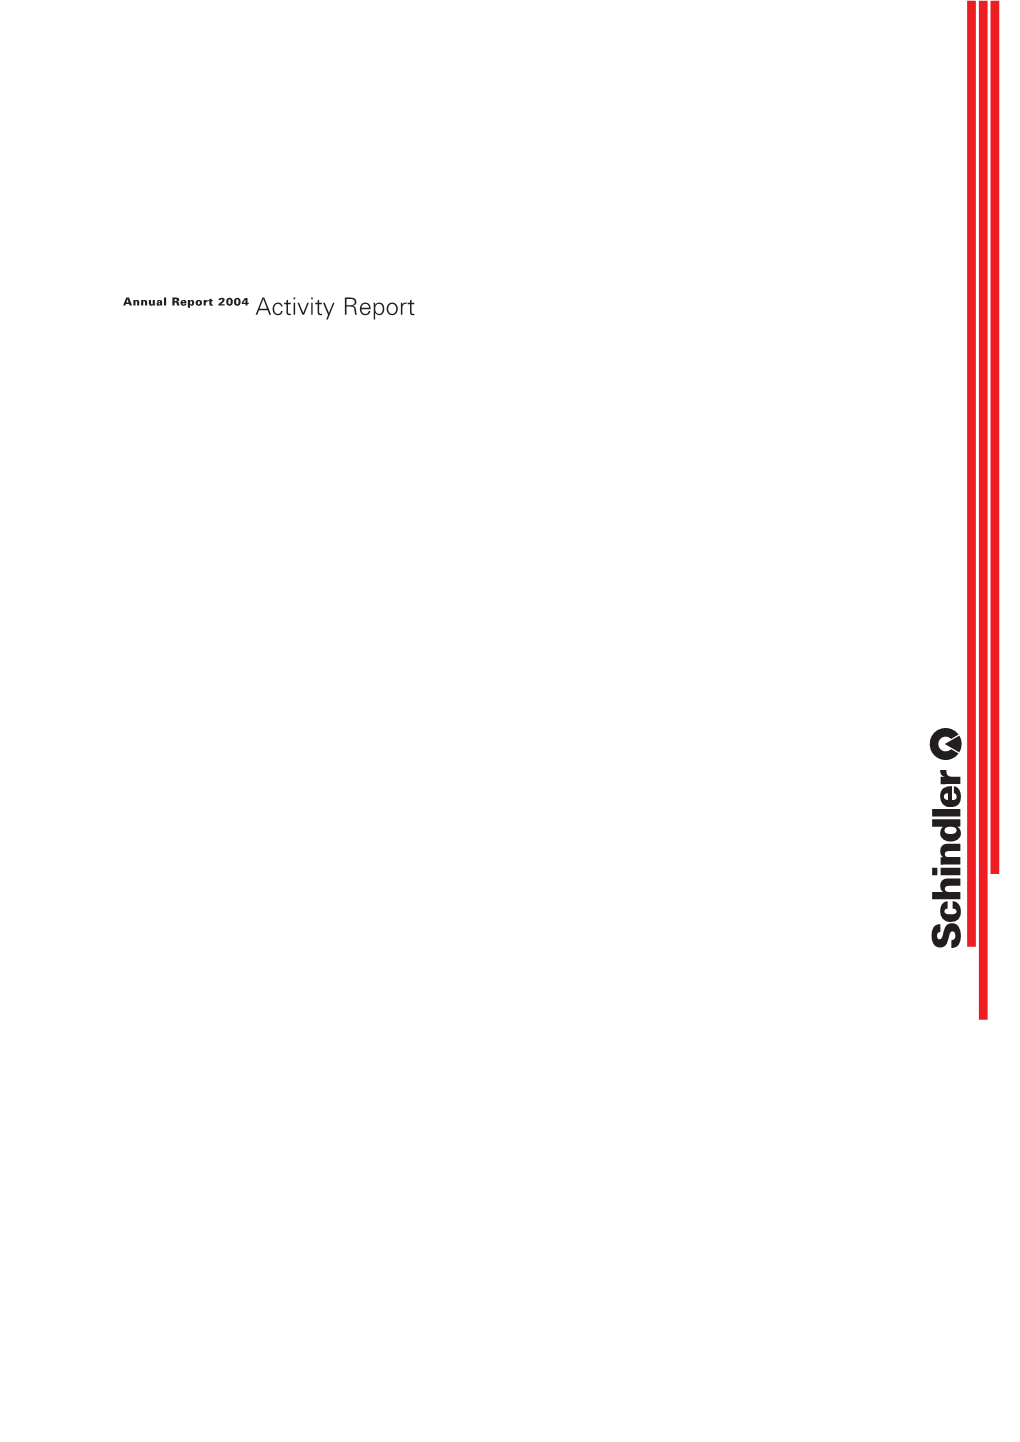 Annual Report (2004, English)